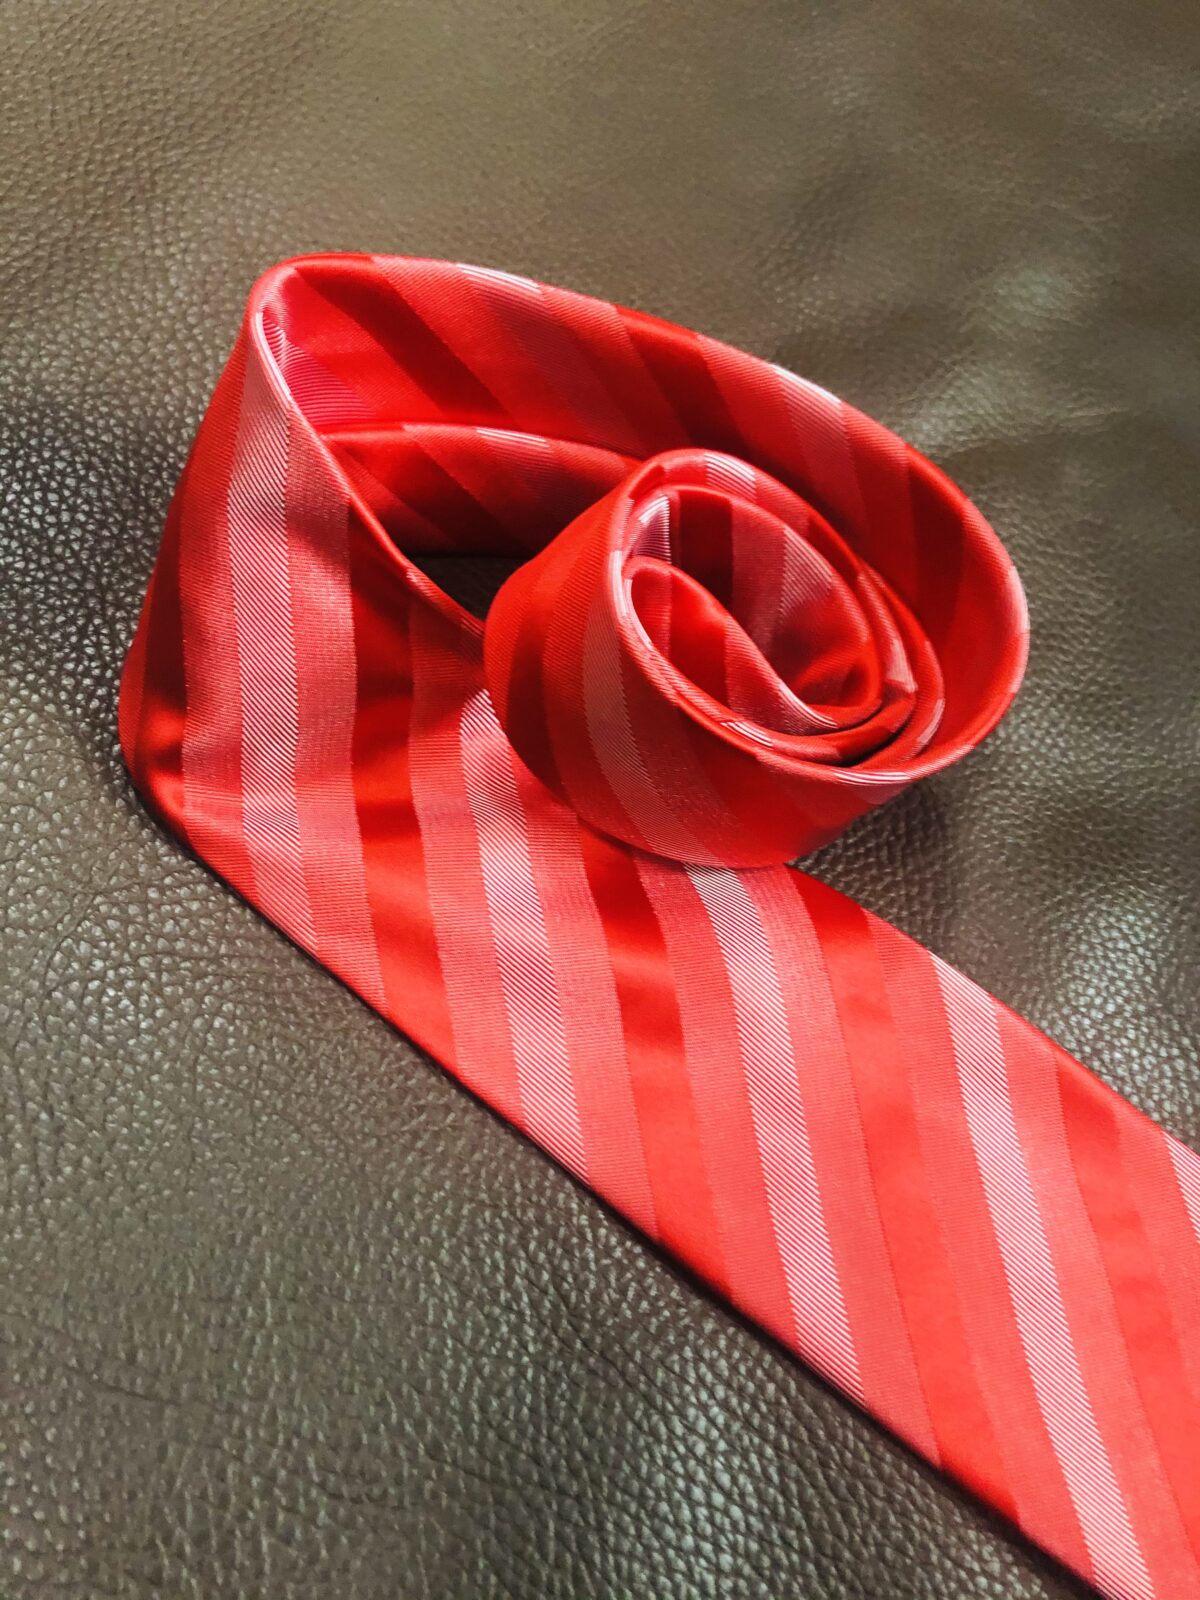 Pánská nová kravata